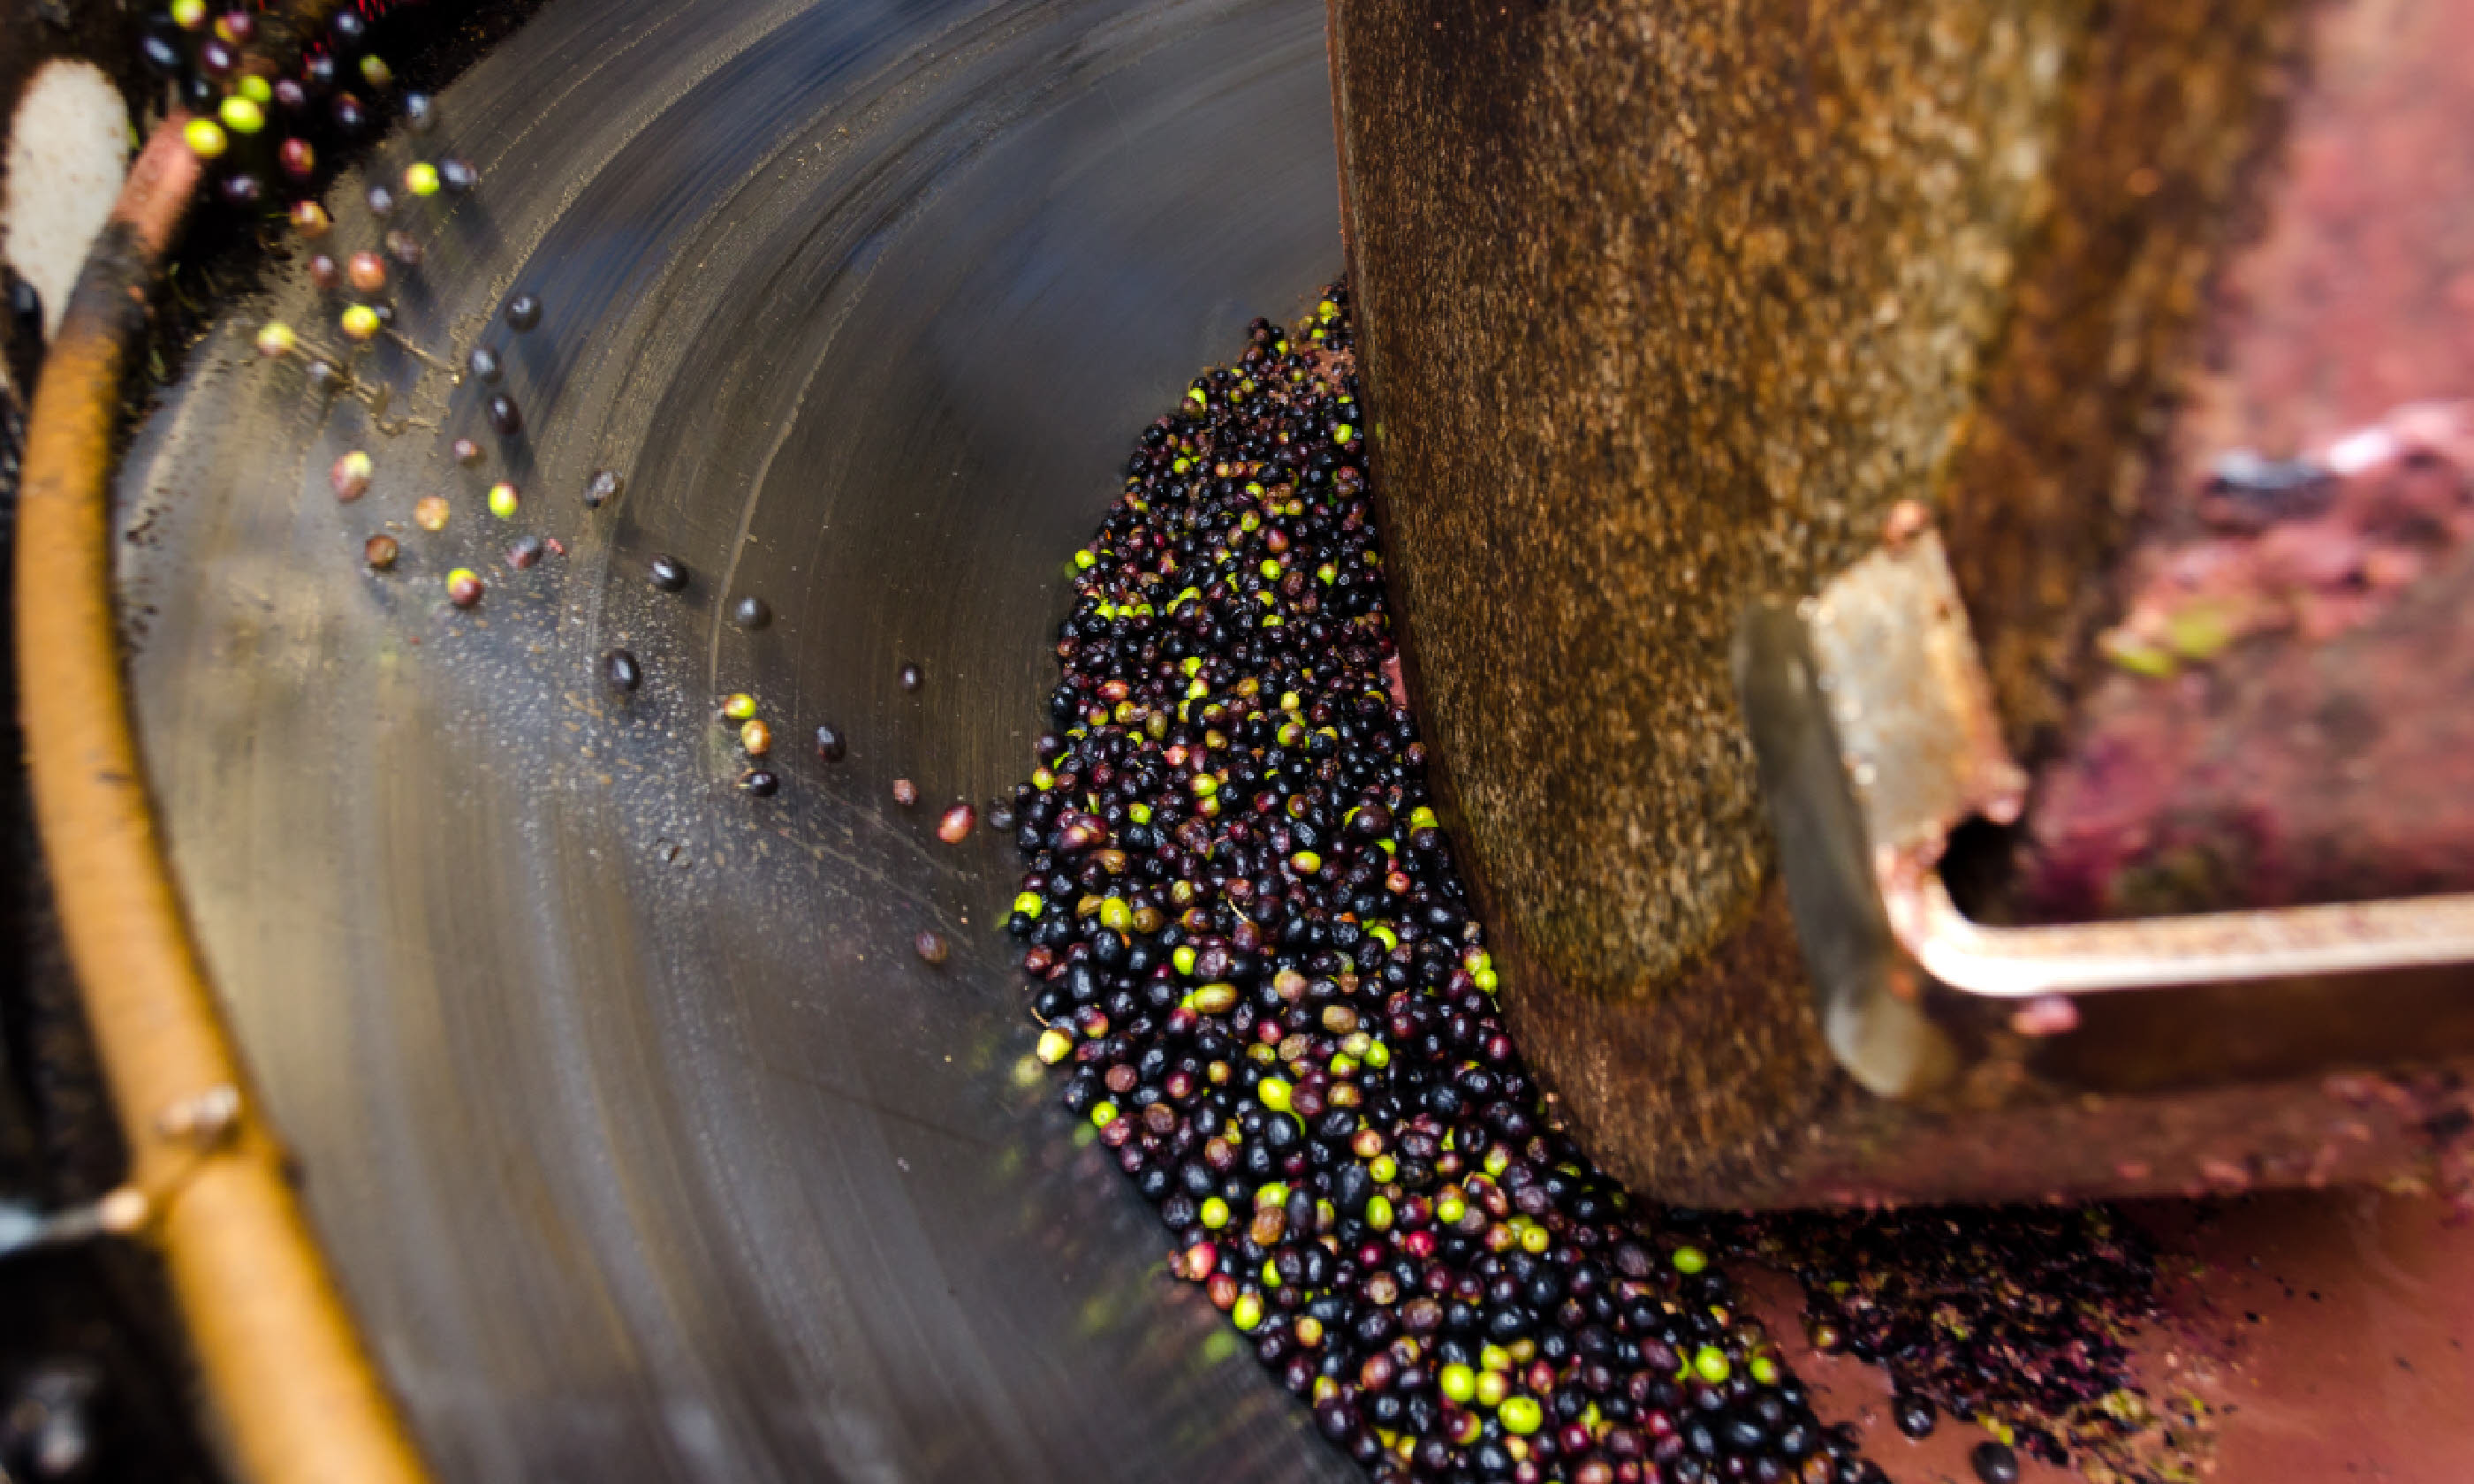 Granite millstone crushing olives (Shutterstock)